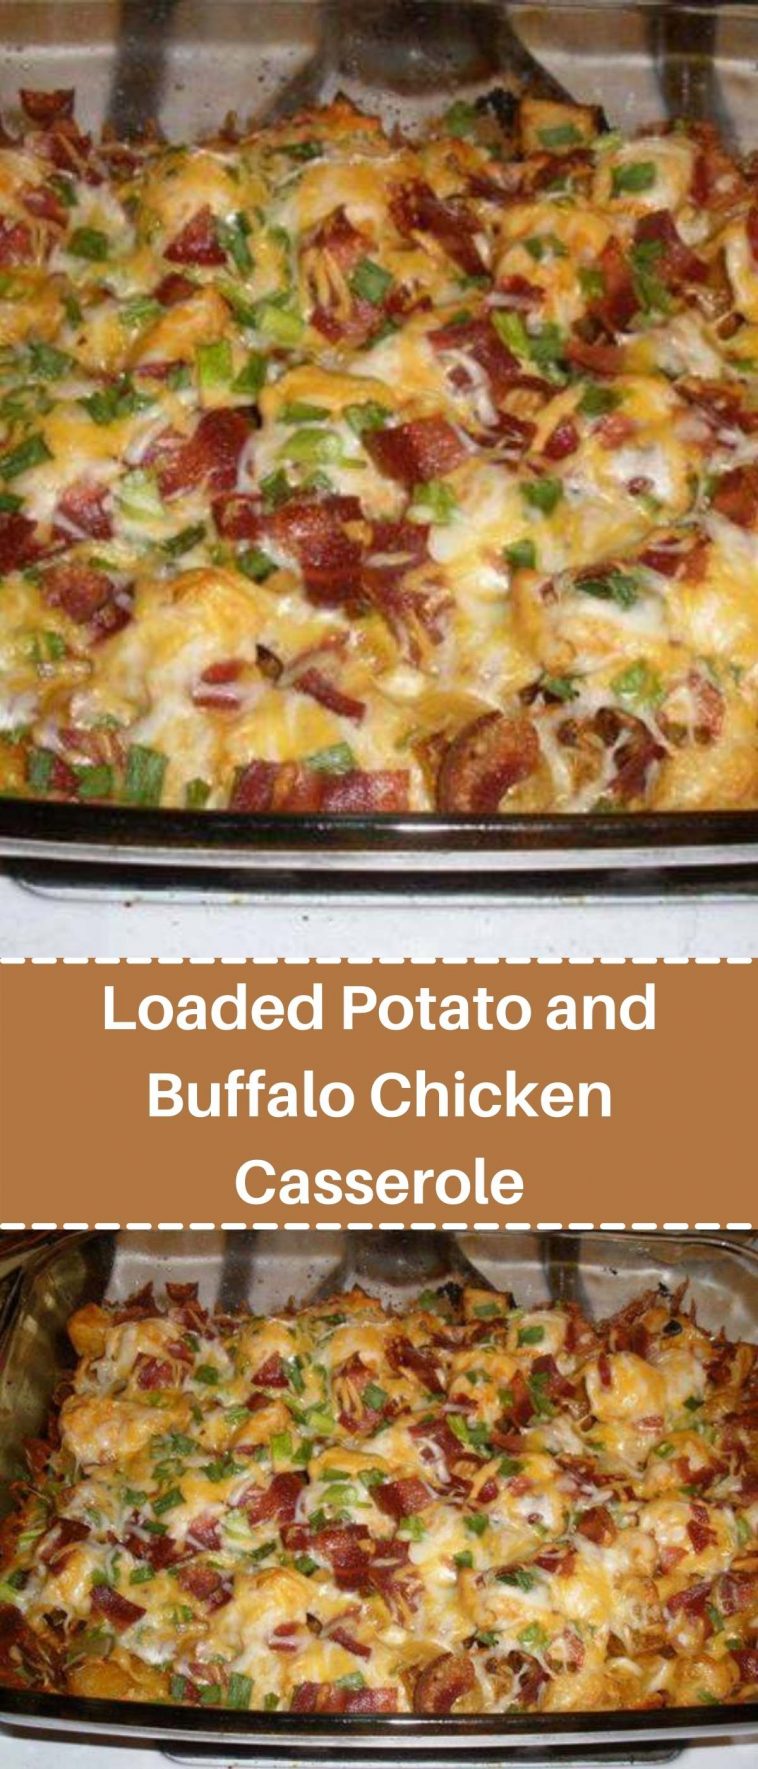 Loaded Potato and Buffalo Chicken Casserole